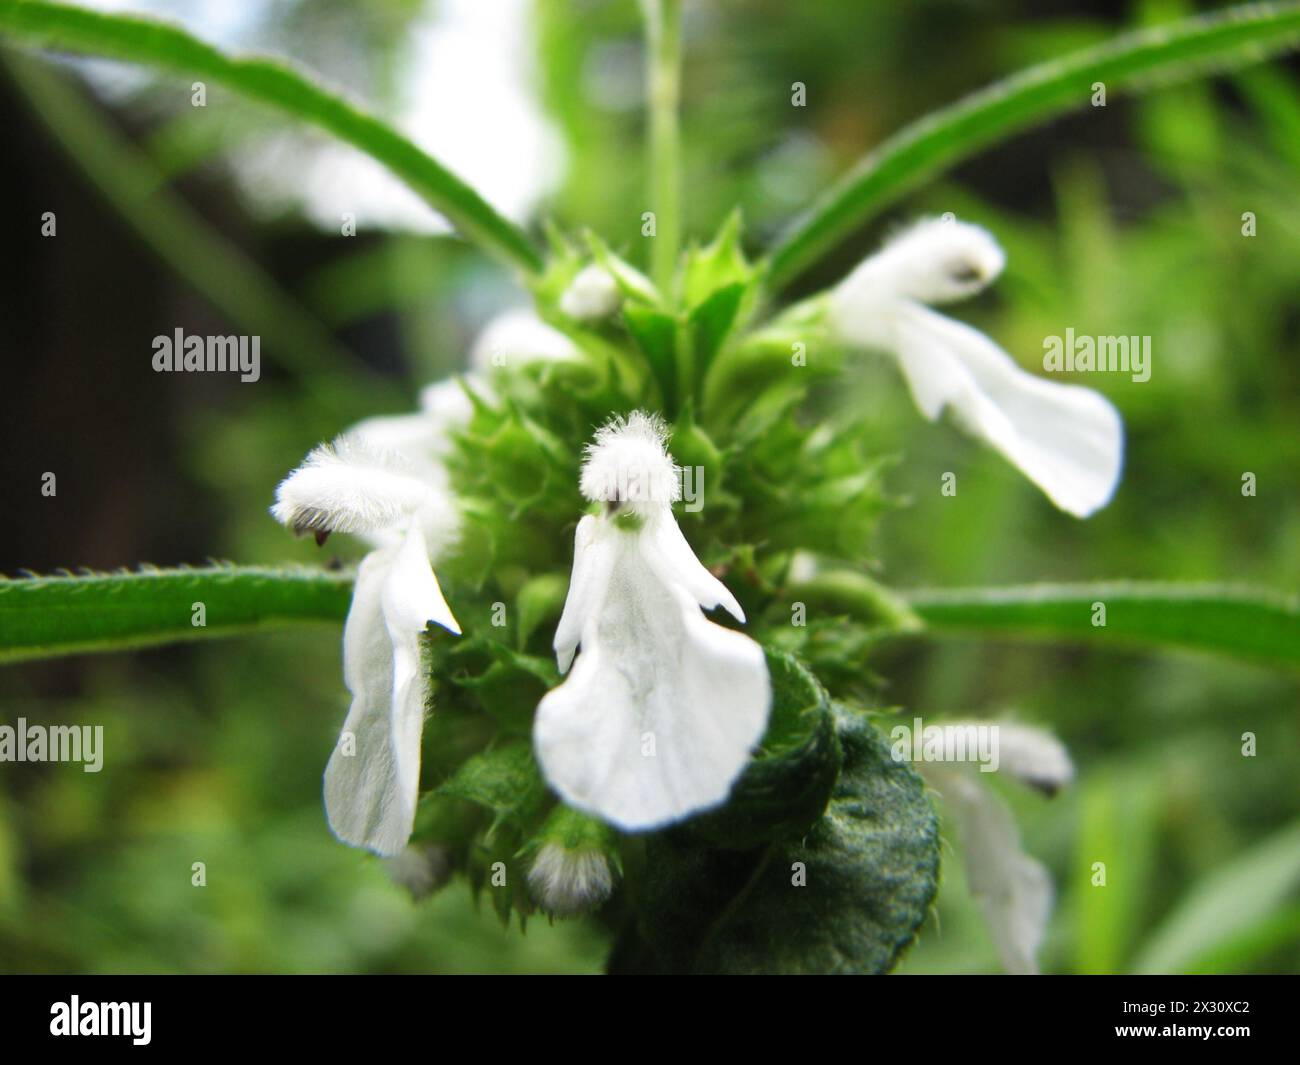 Leucas aspera plant in white bloom. Stock Photo